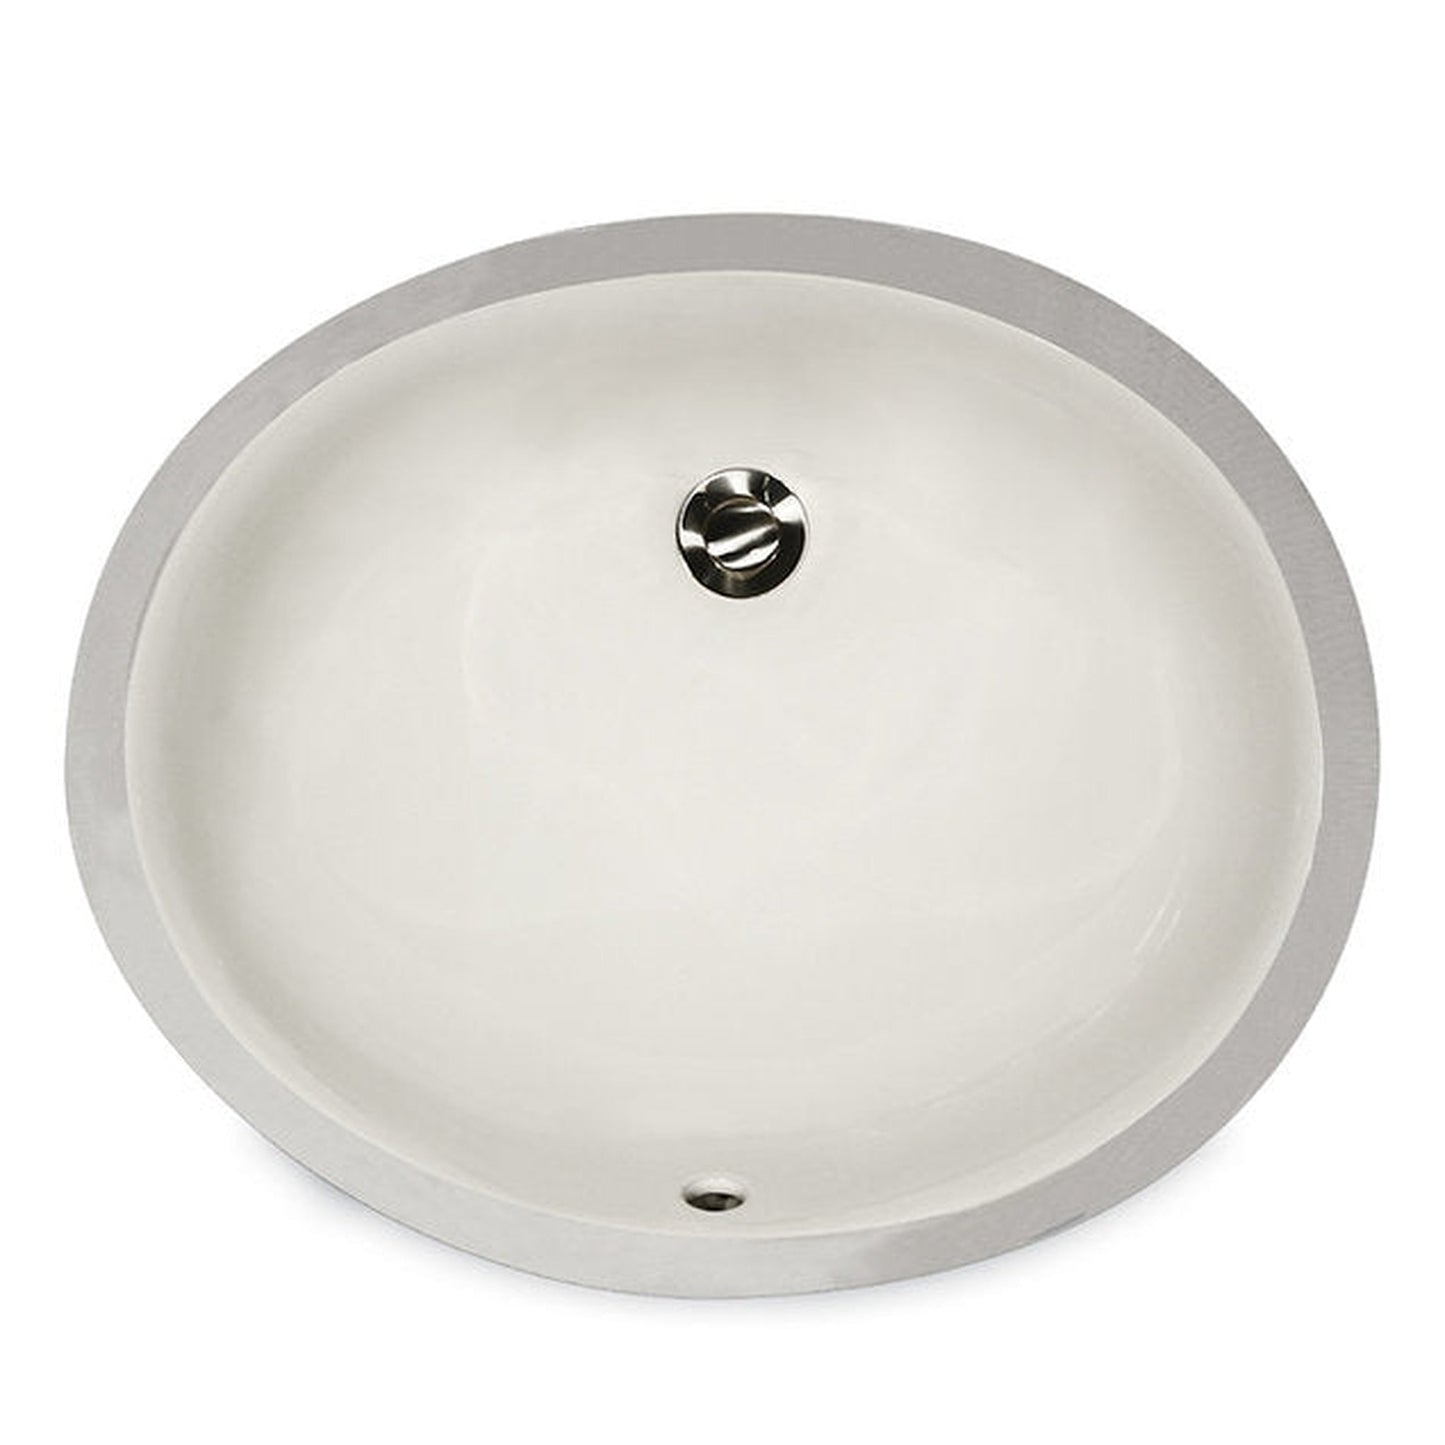 Nantucket Sinks Great Point 20" W x 16" D Oval Porcelain Enamel Glaze Undermount Ceramic Sink In Bisque With Oveflow